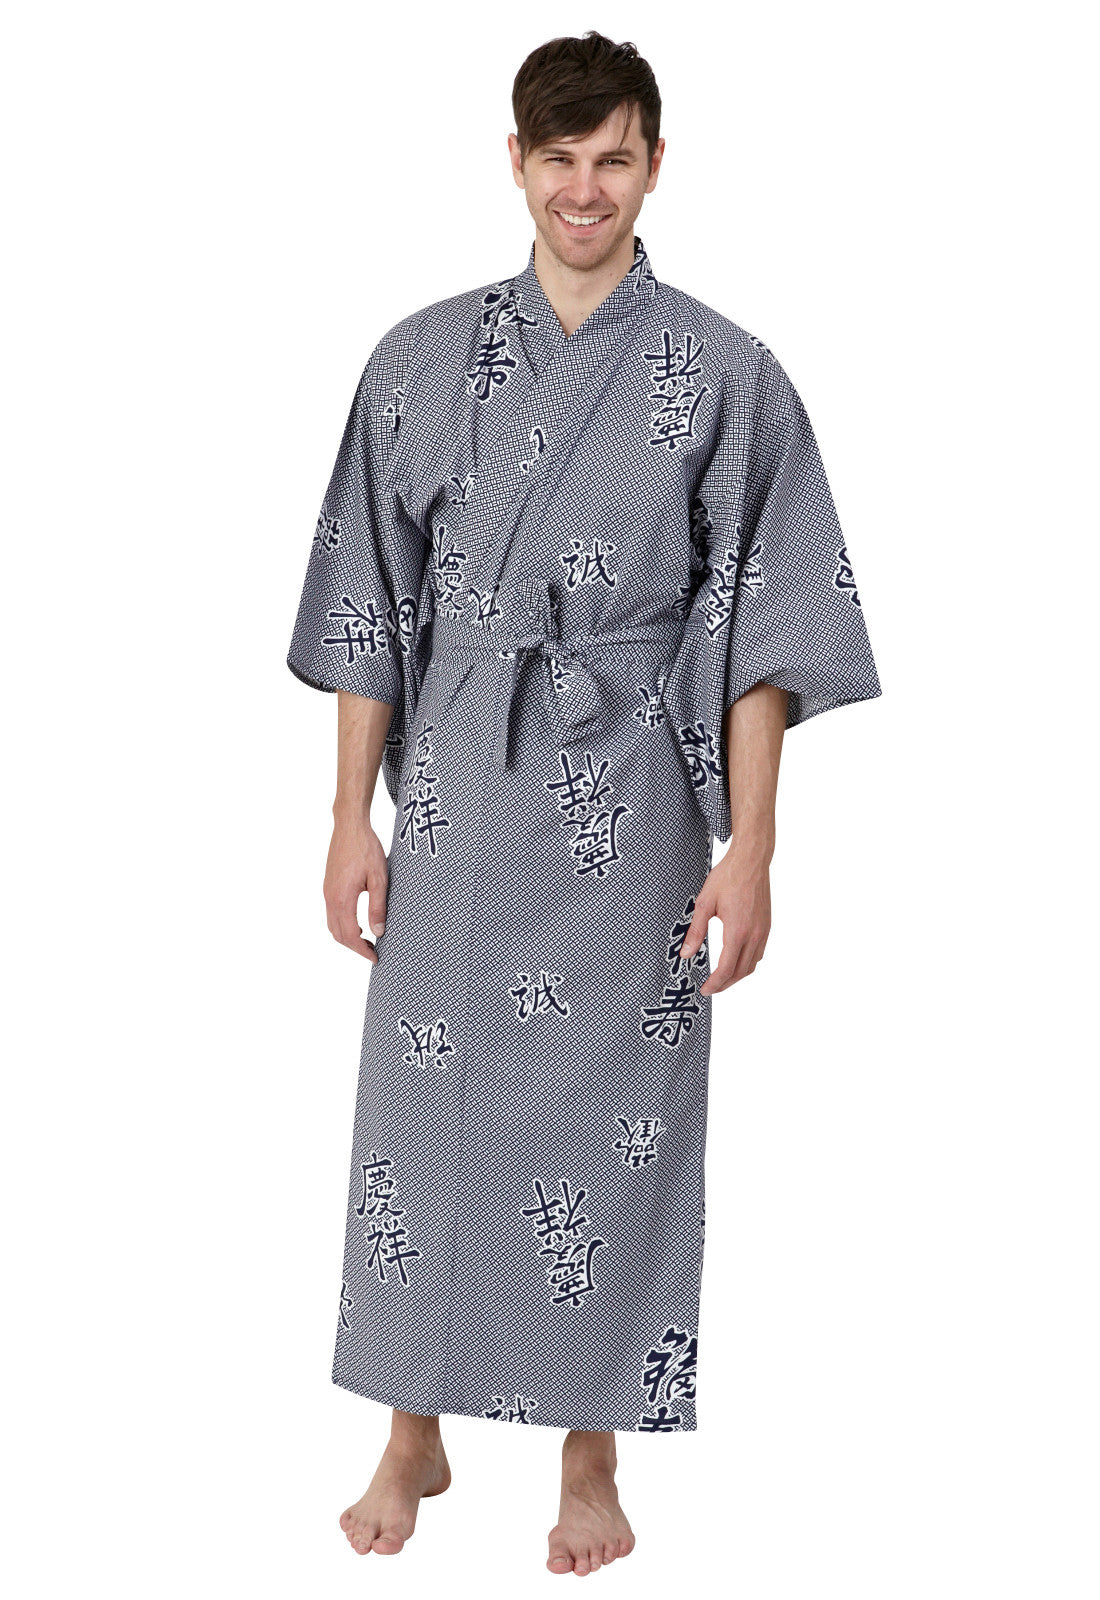 FANCY PUMPKIN Jinbei Men's Japanese Yukata Kimono Home Robe Pajamas  Dressing Gown A15 【Size L】 at Amazon Men's Clothing store